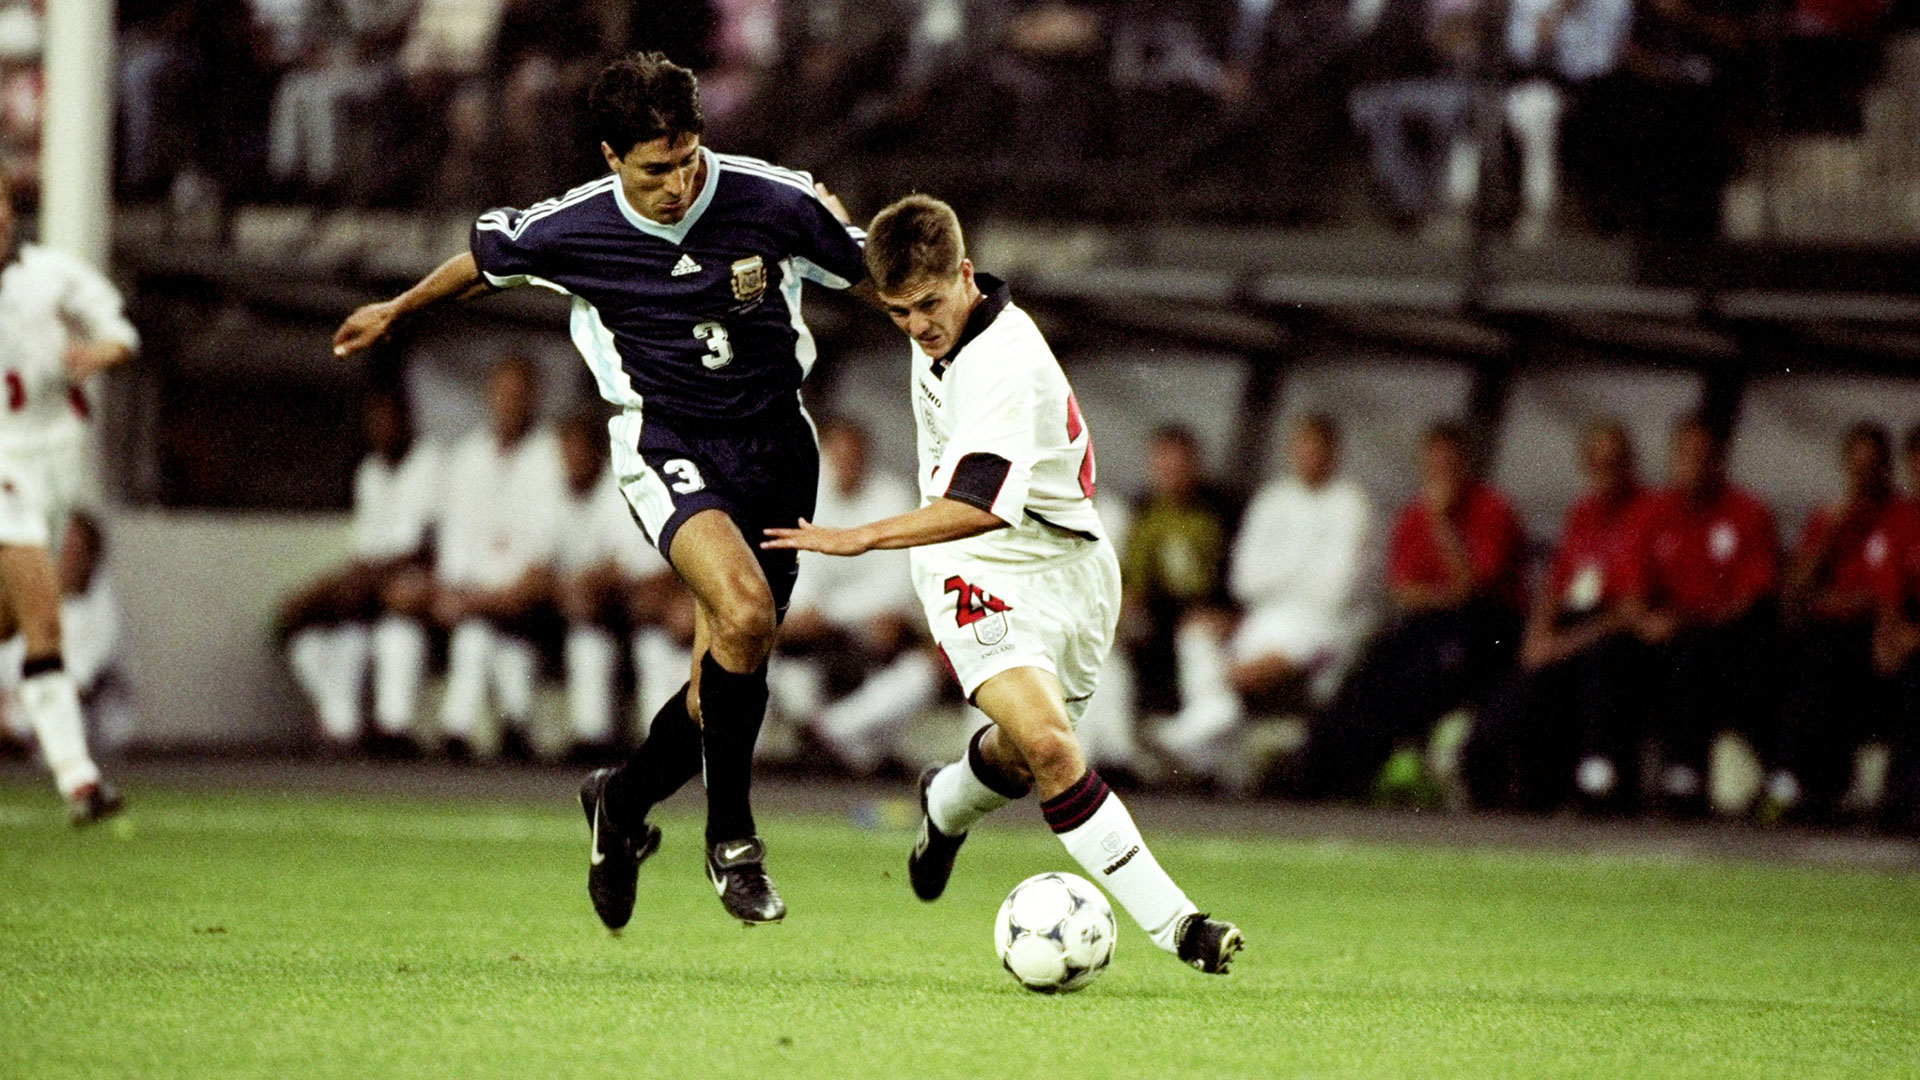 Michael Owen England Argentina 1998 World Cup - Goal.com1920 x 1080